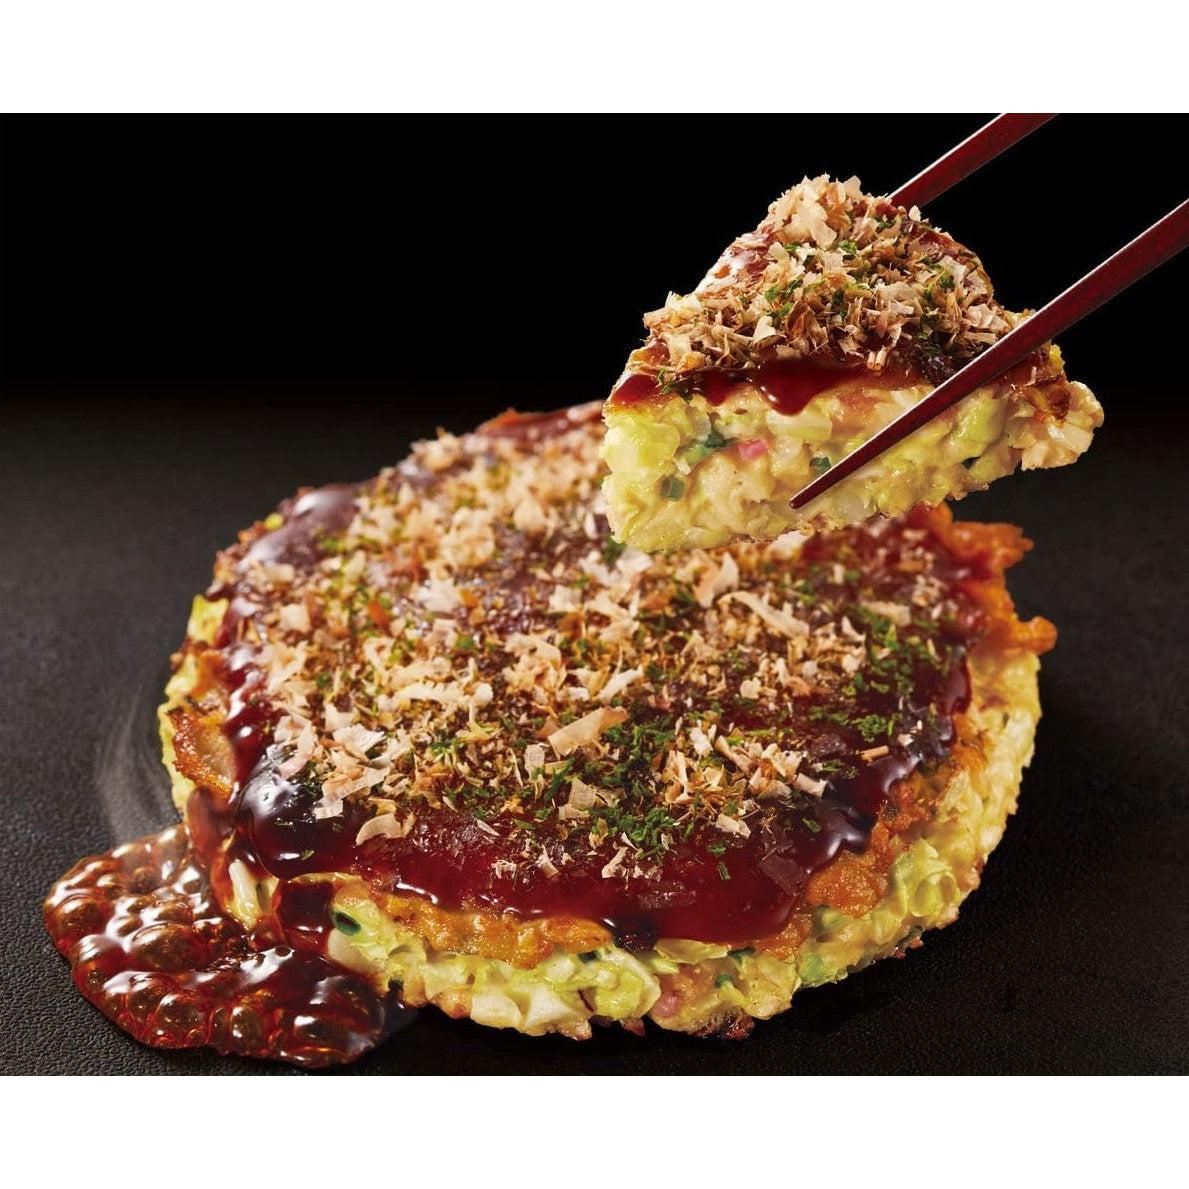 Nisshin Okonomiyaki Flour Mix with Grated Yam 400g